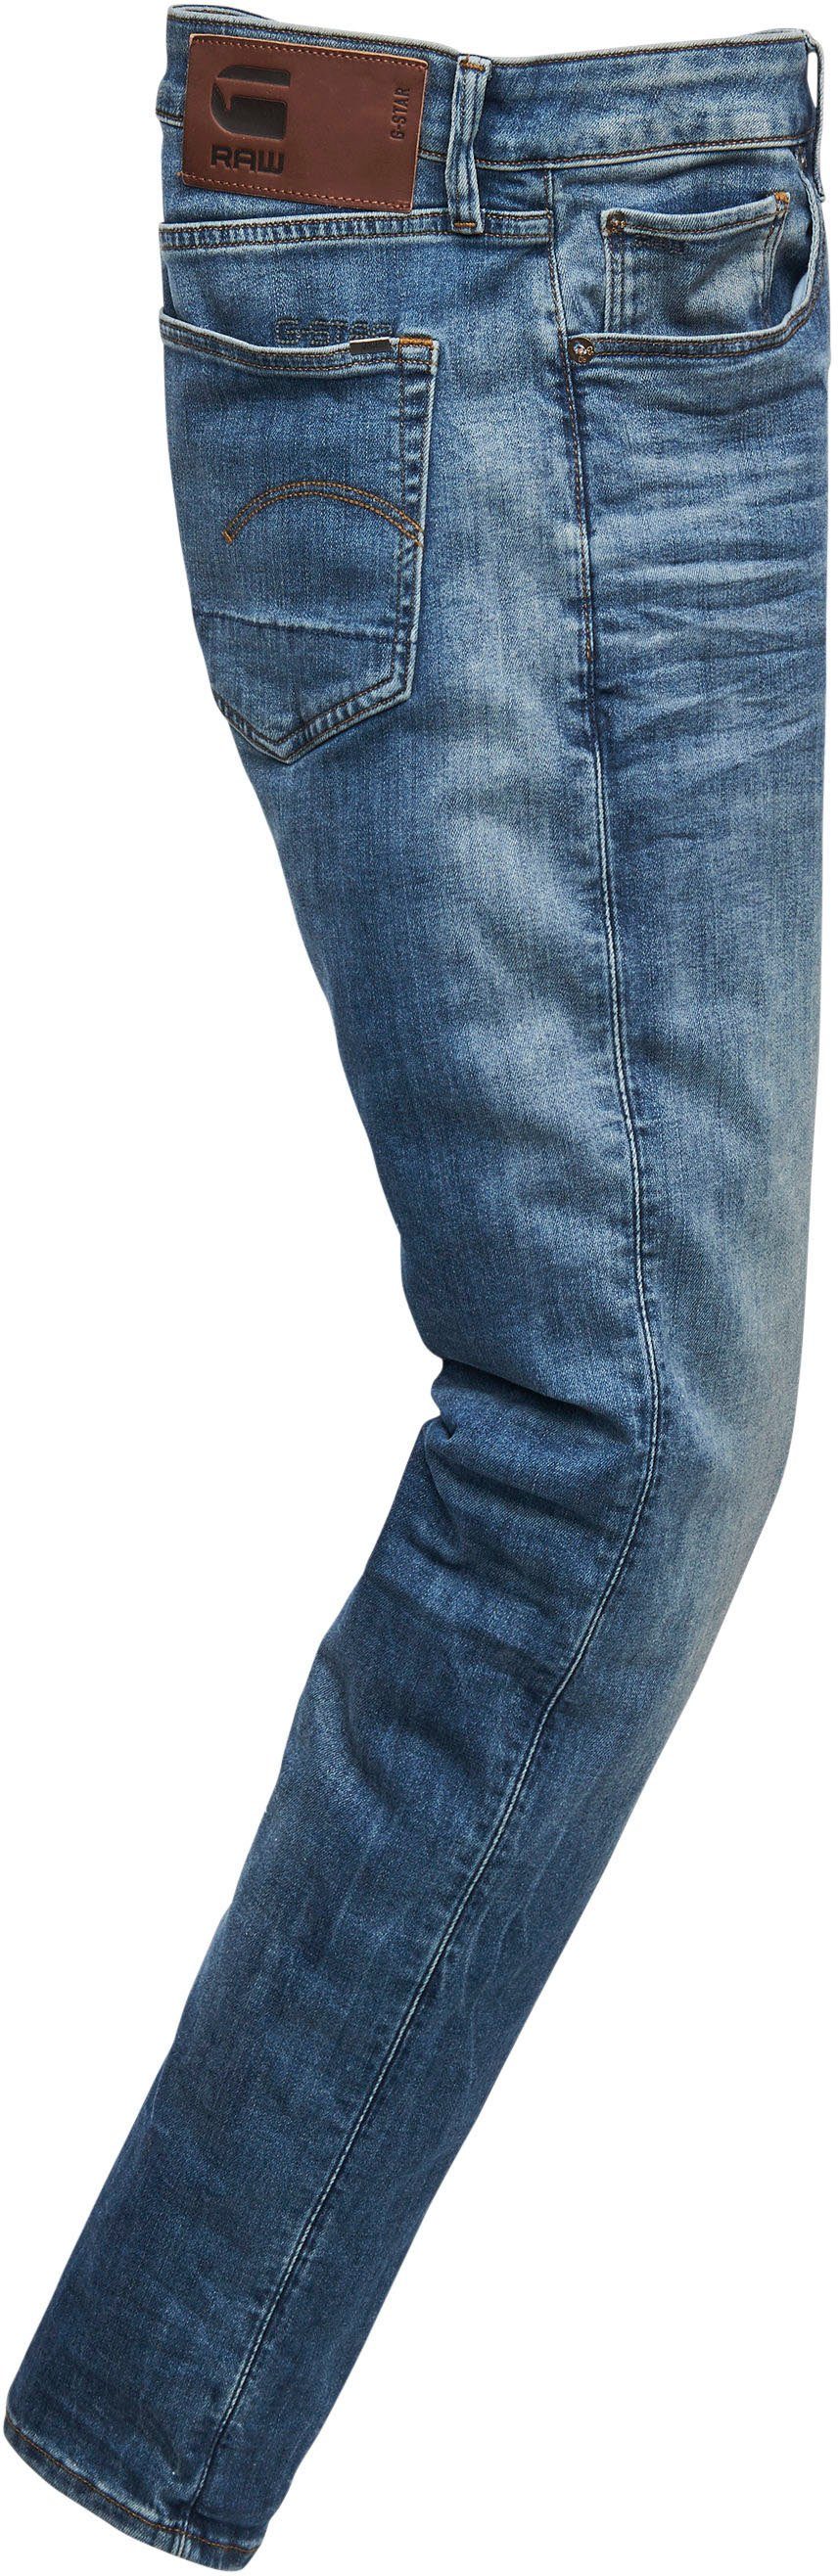 G-Star RAW Slim-fit-Jeans 3301 Slim blue